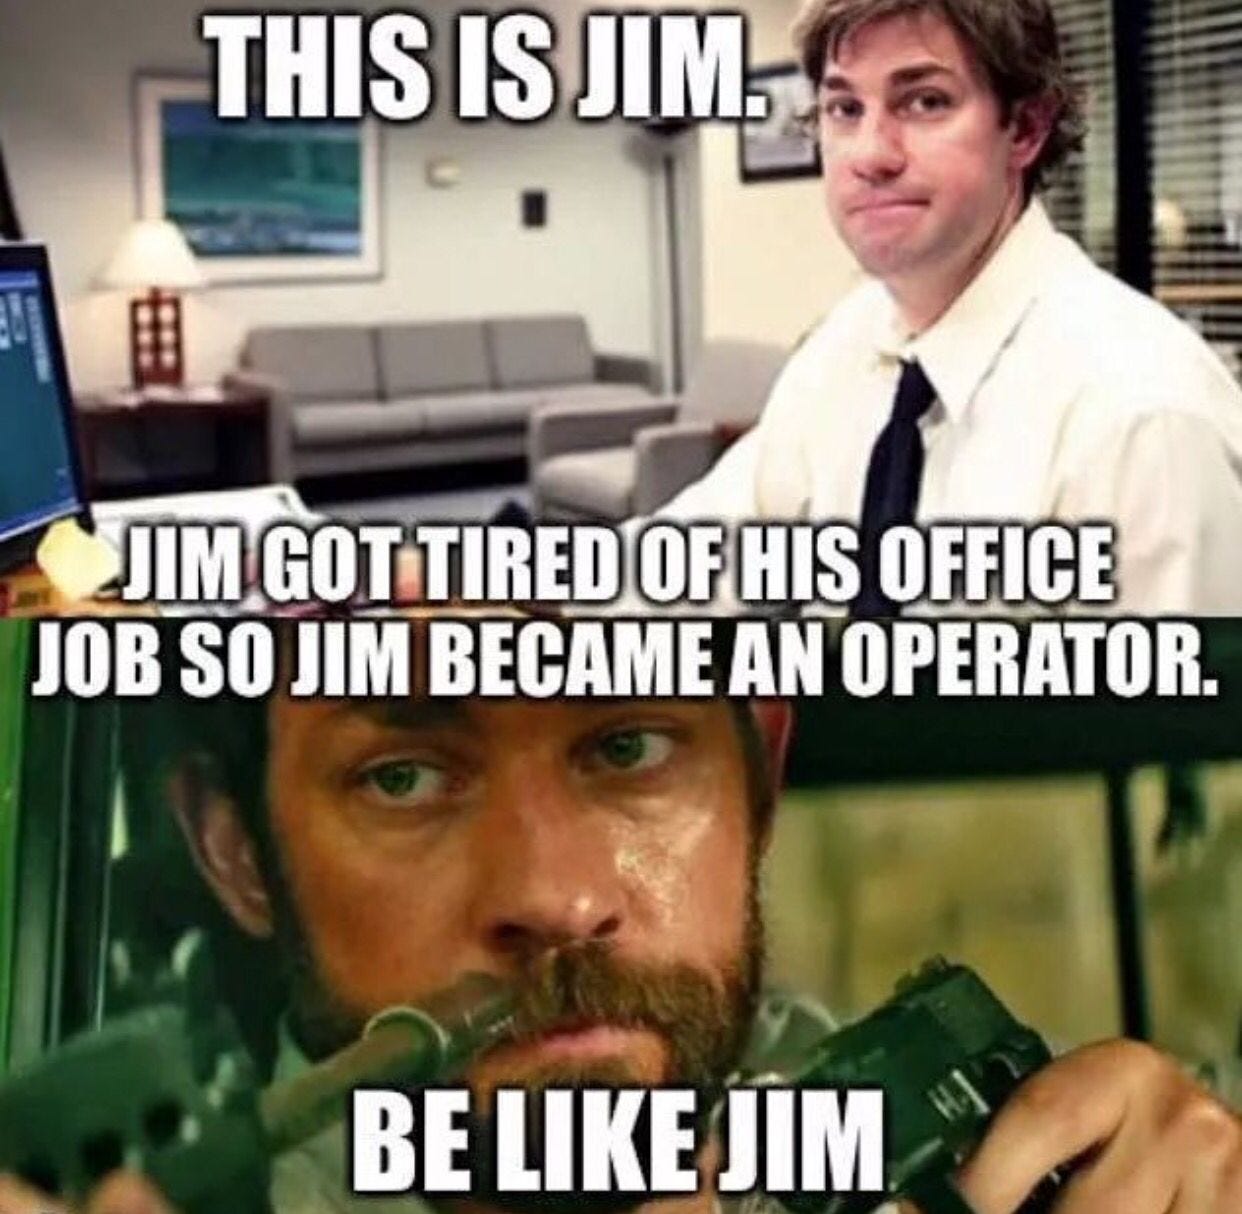 Jim the operator | Military humor, Funny, Humor